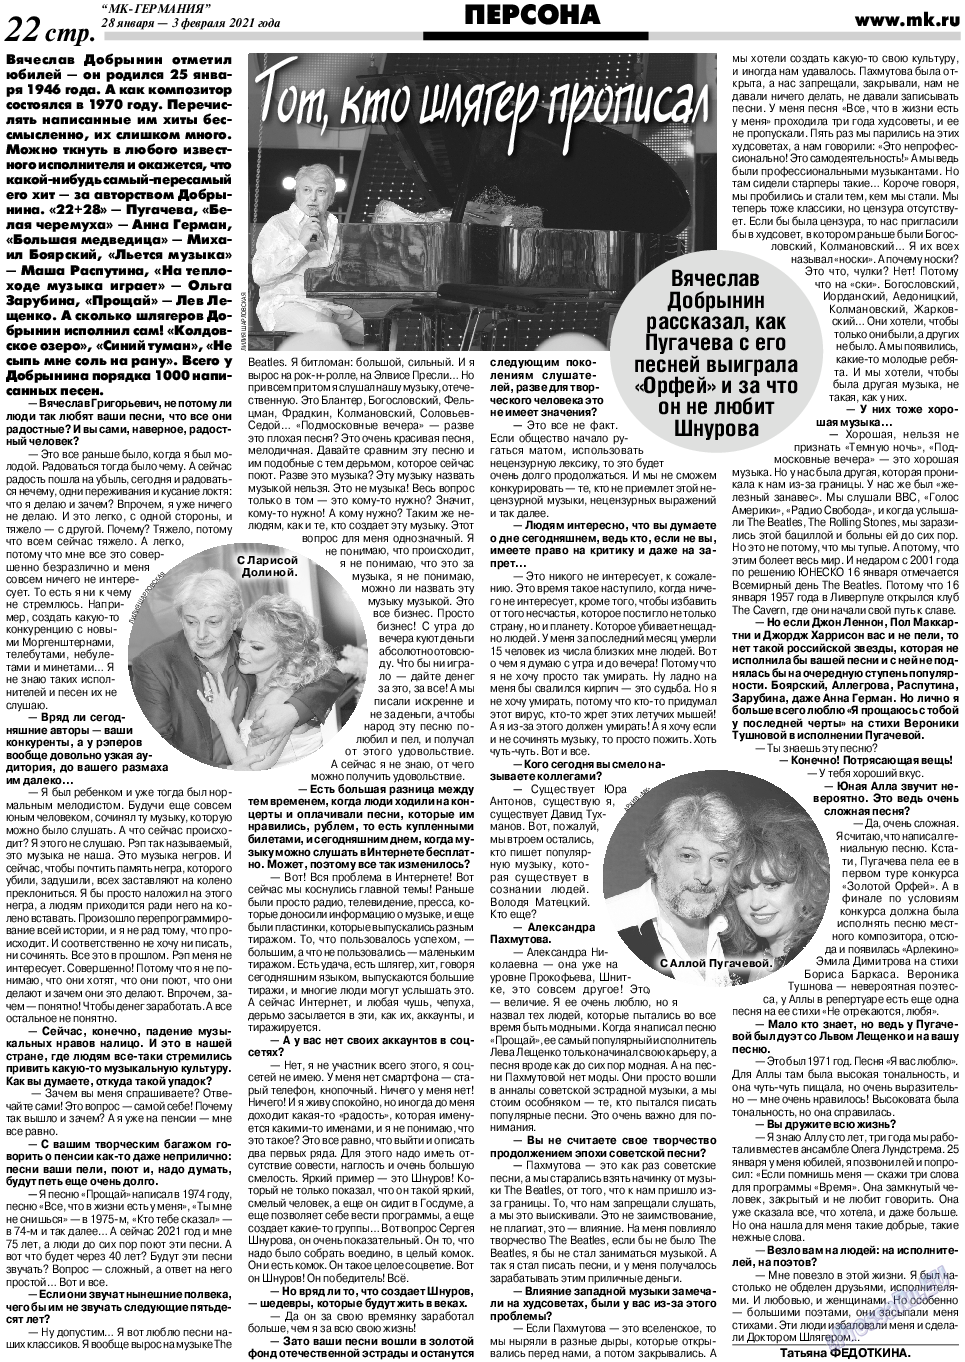 МК-Германия, газета. 2021 №5 стр.22